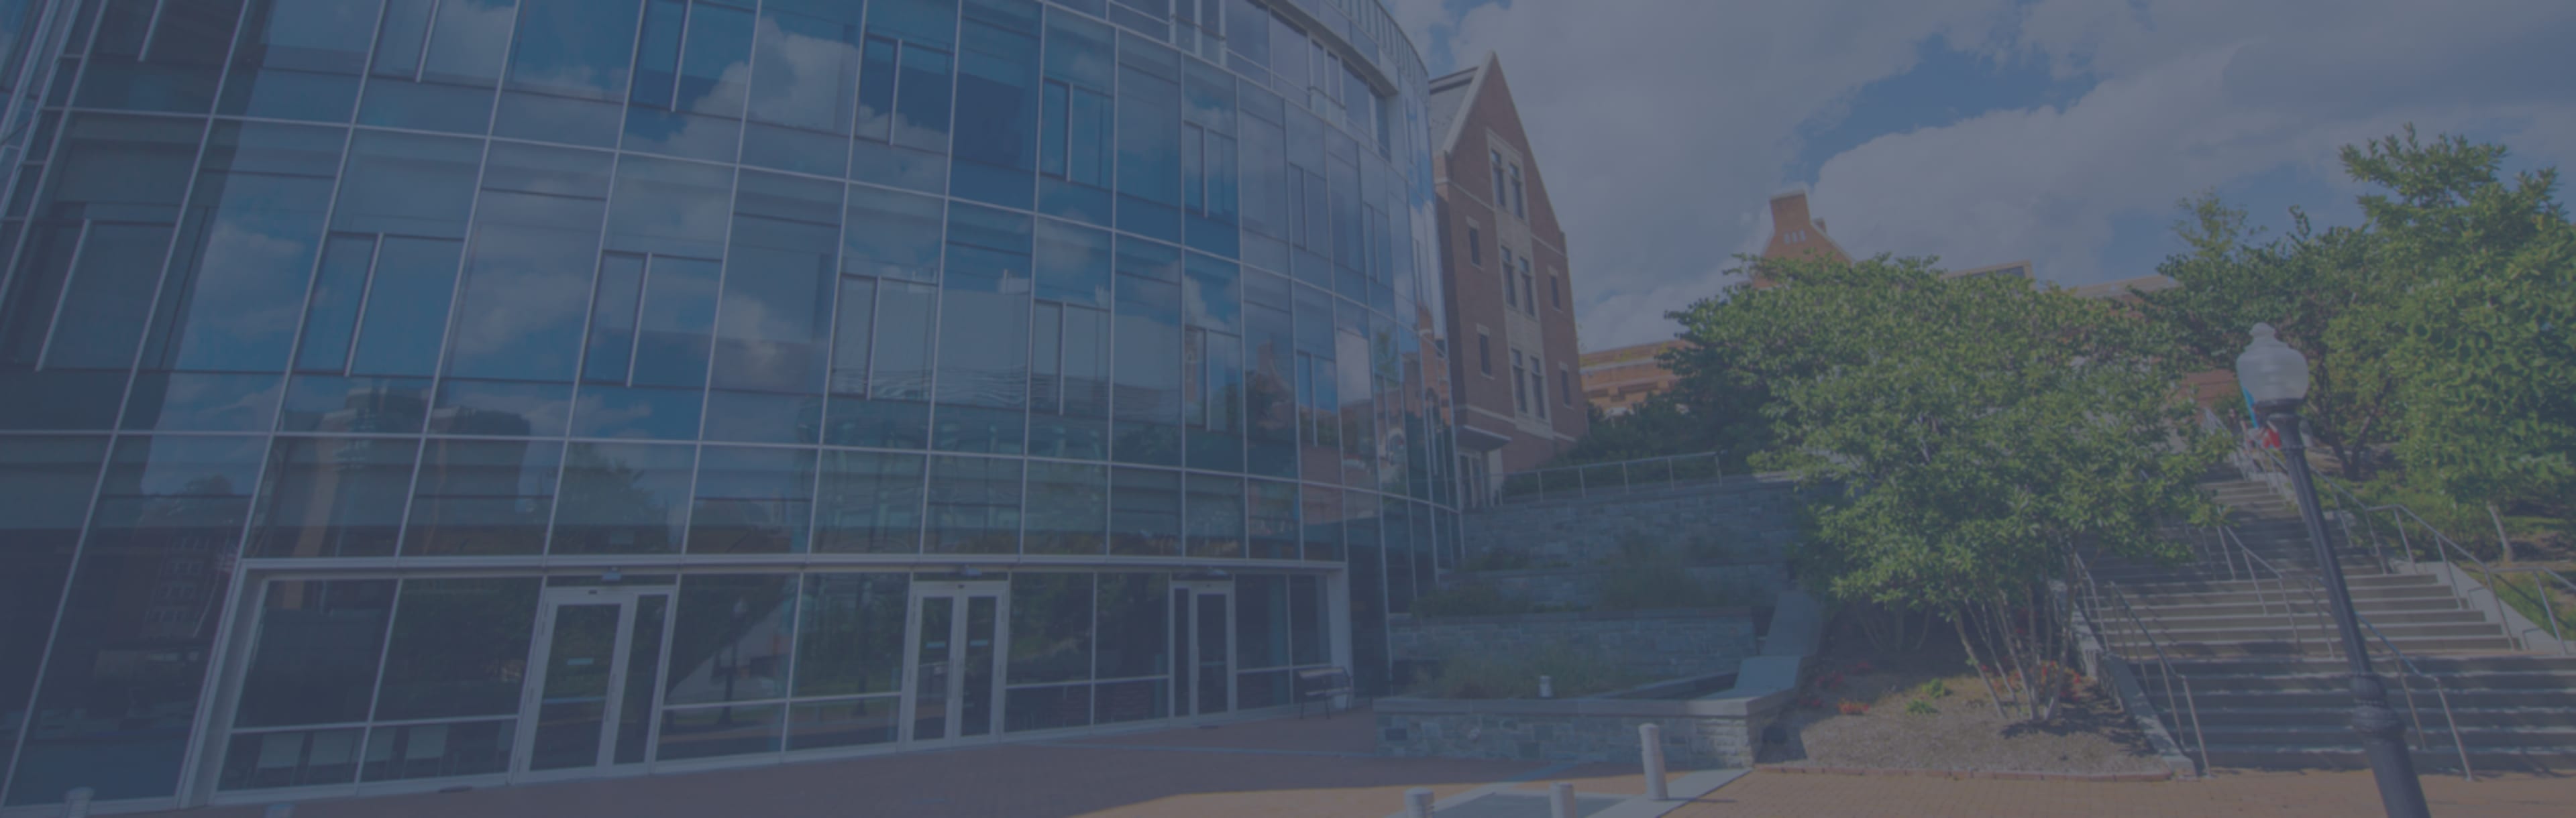 Georgetown University - McDonough School of Business MBA på heltid